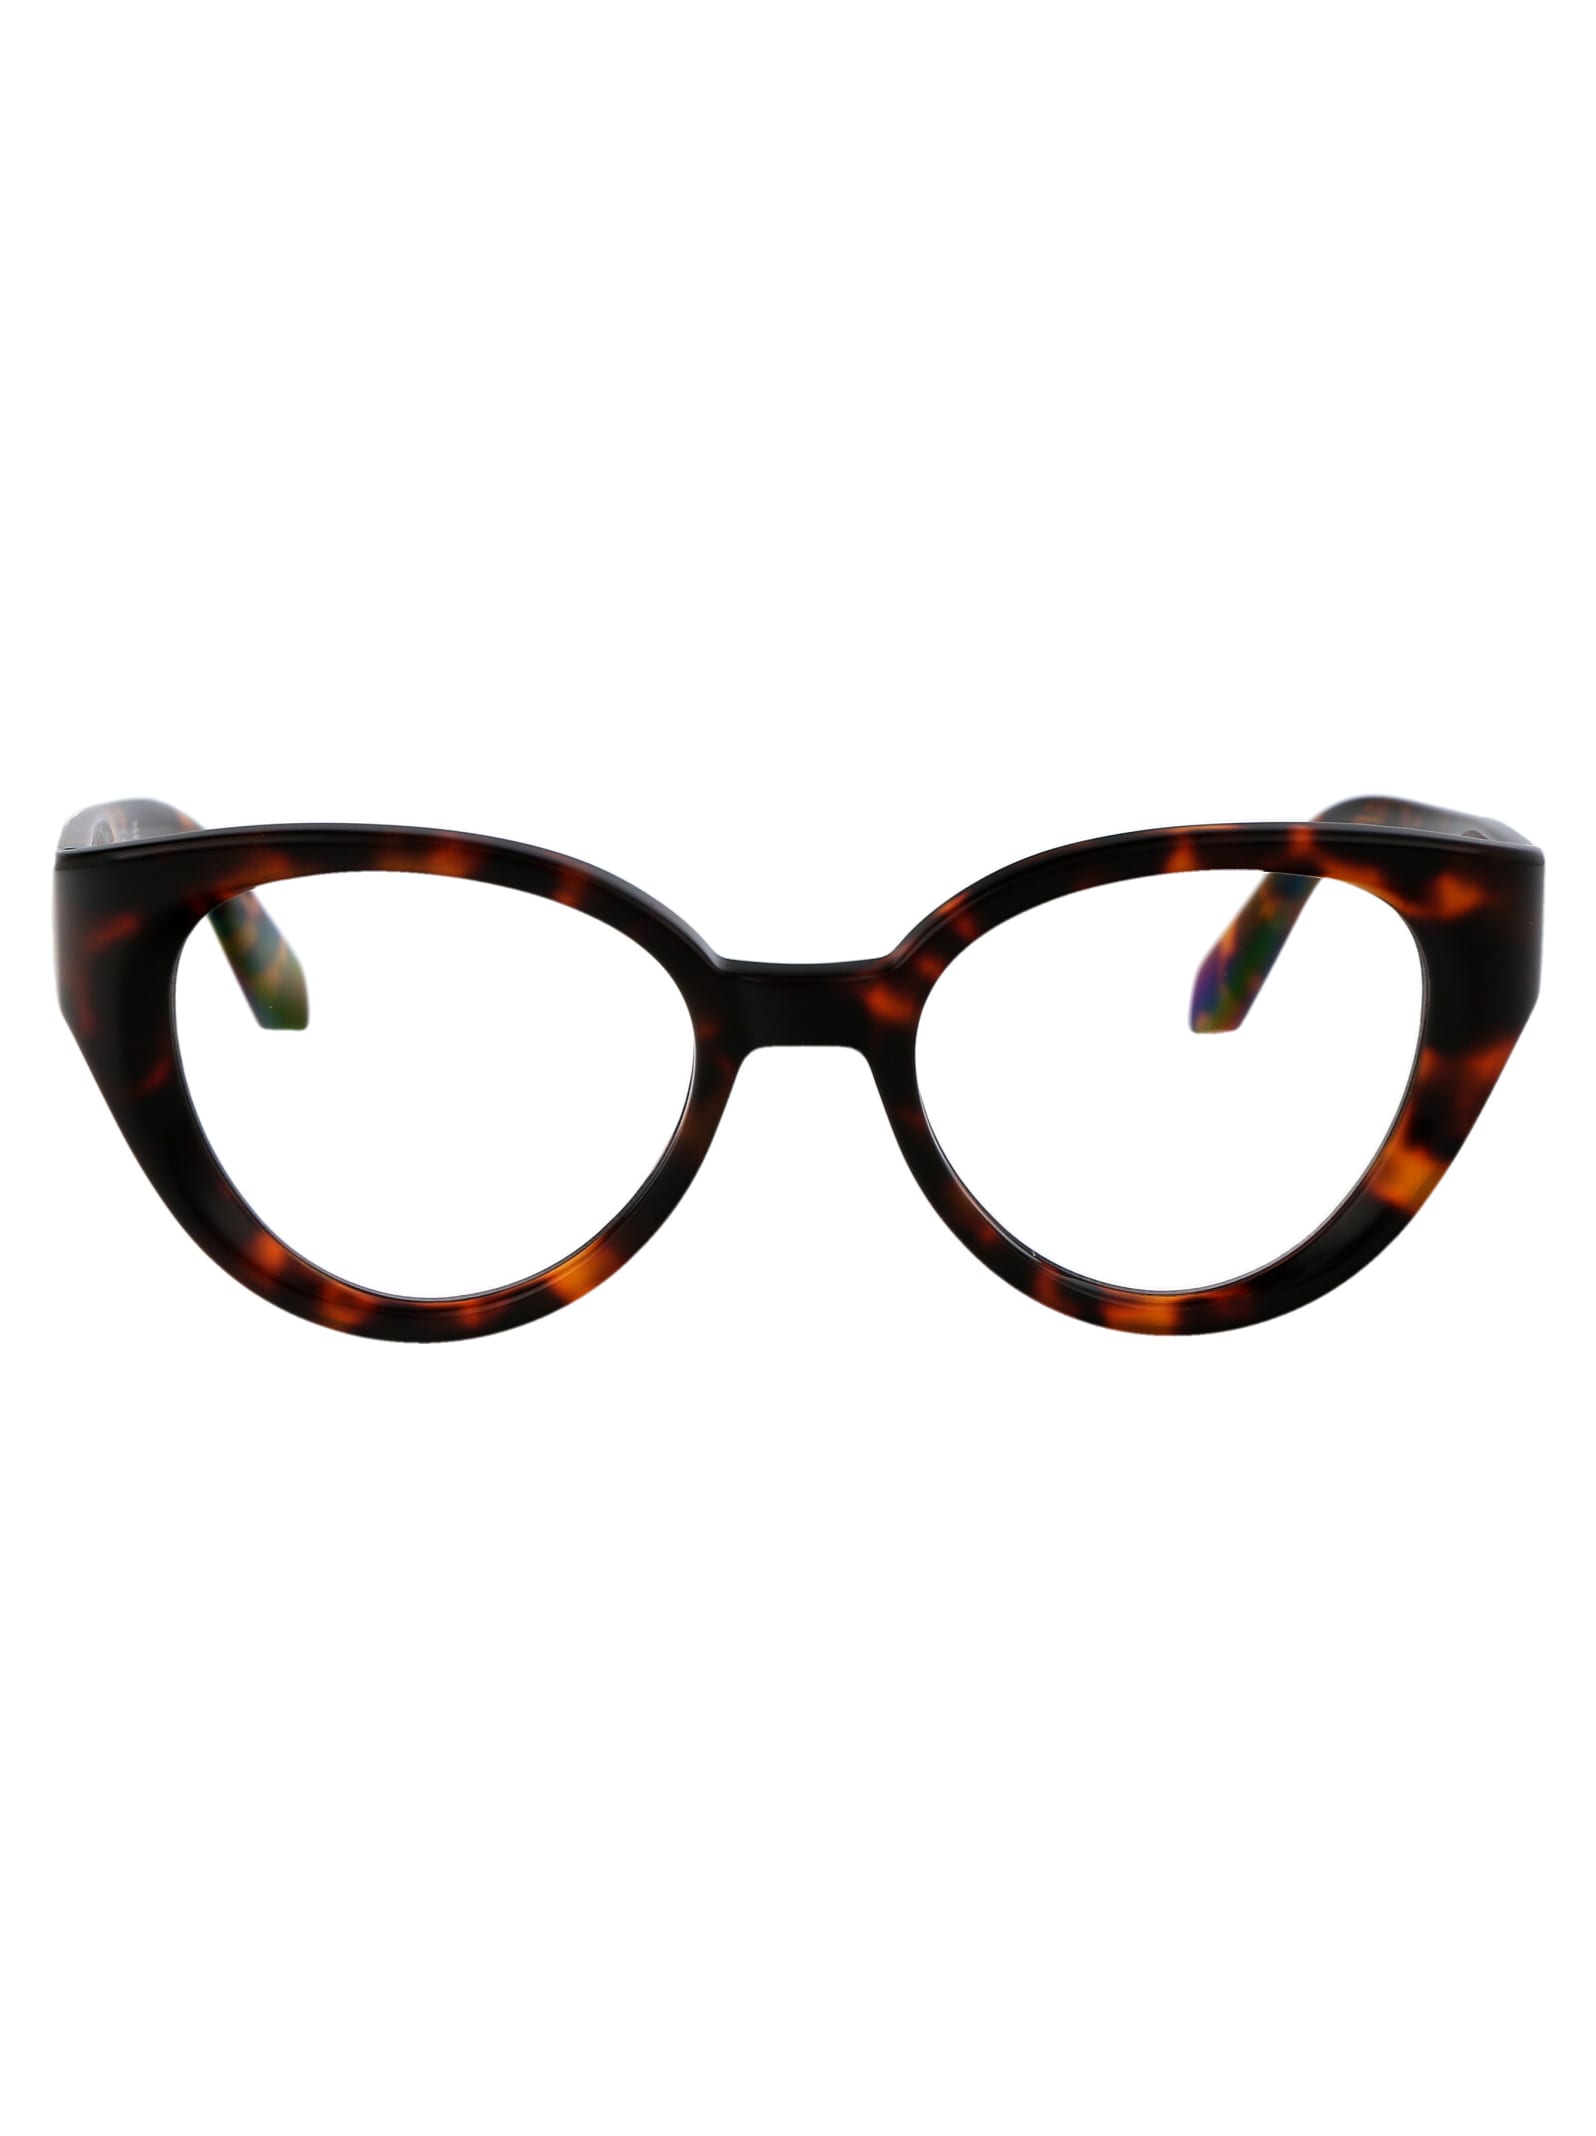 Optical Style 62 Glasses